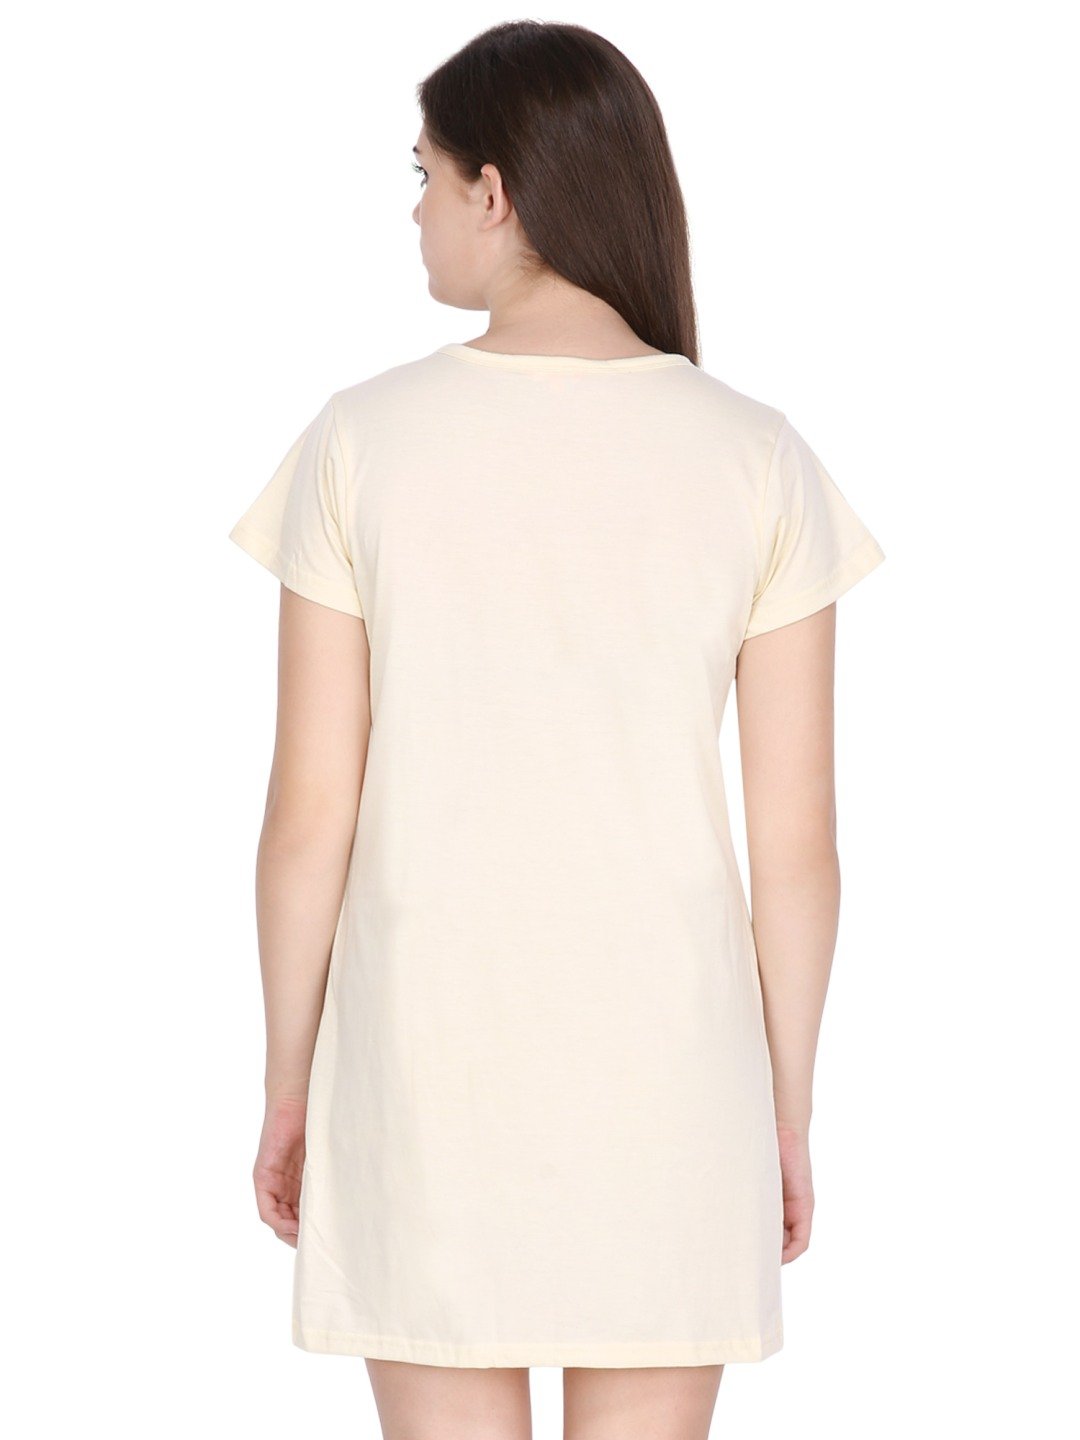 Klamotten Women's Cotton Sleepshirt DB18Yb8